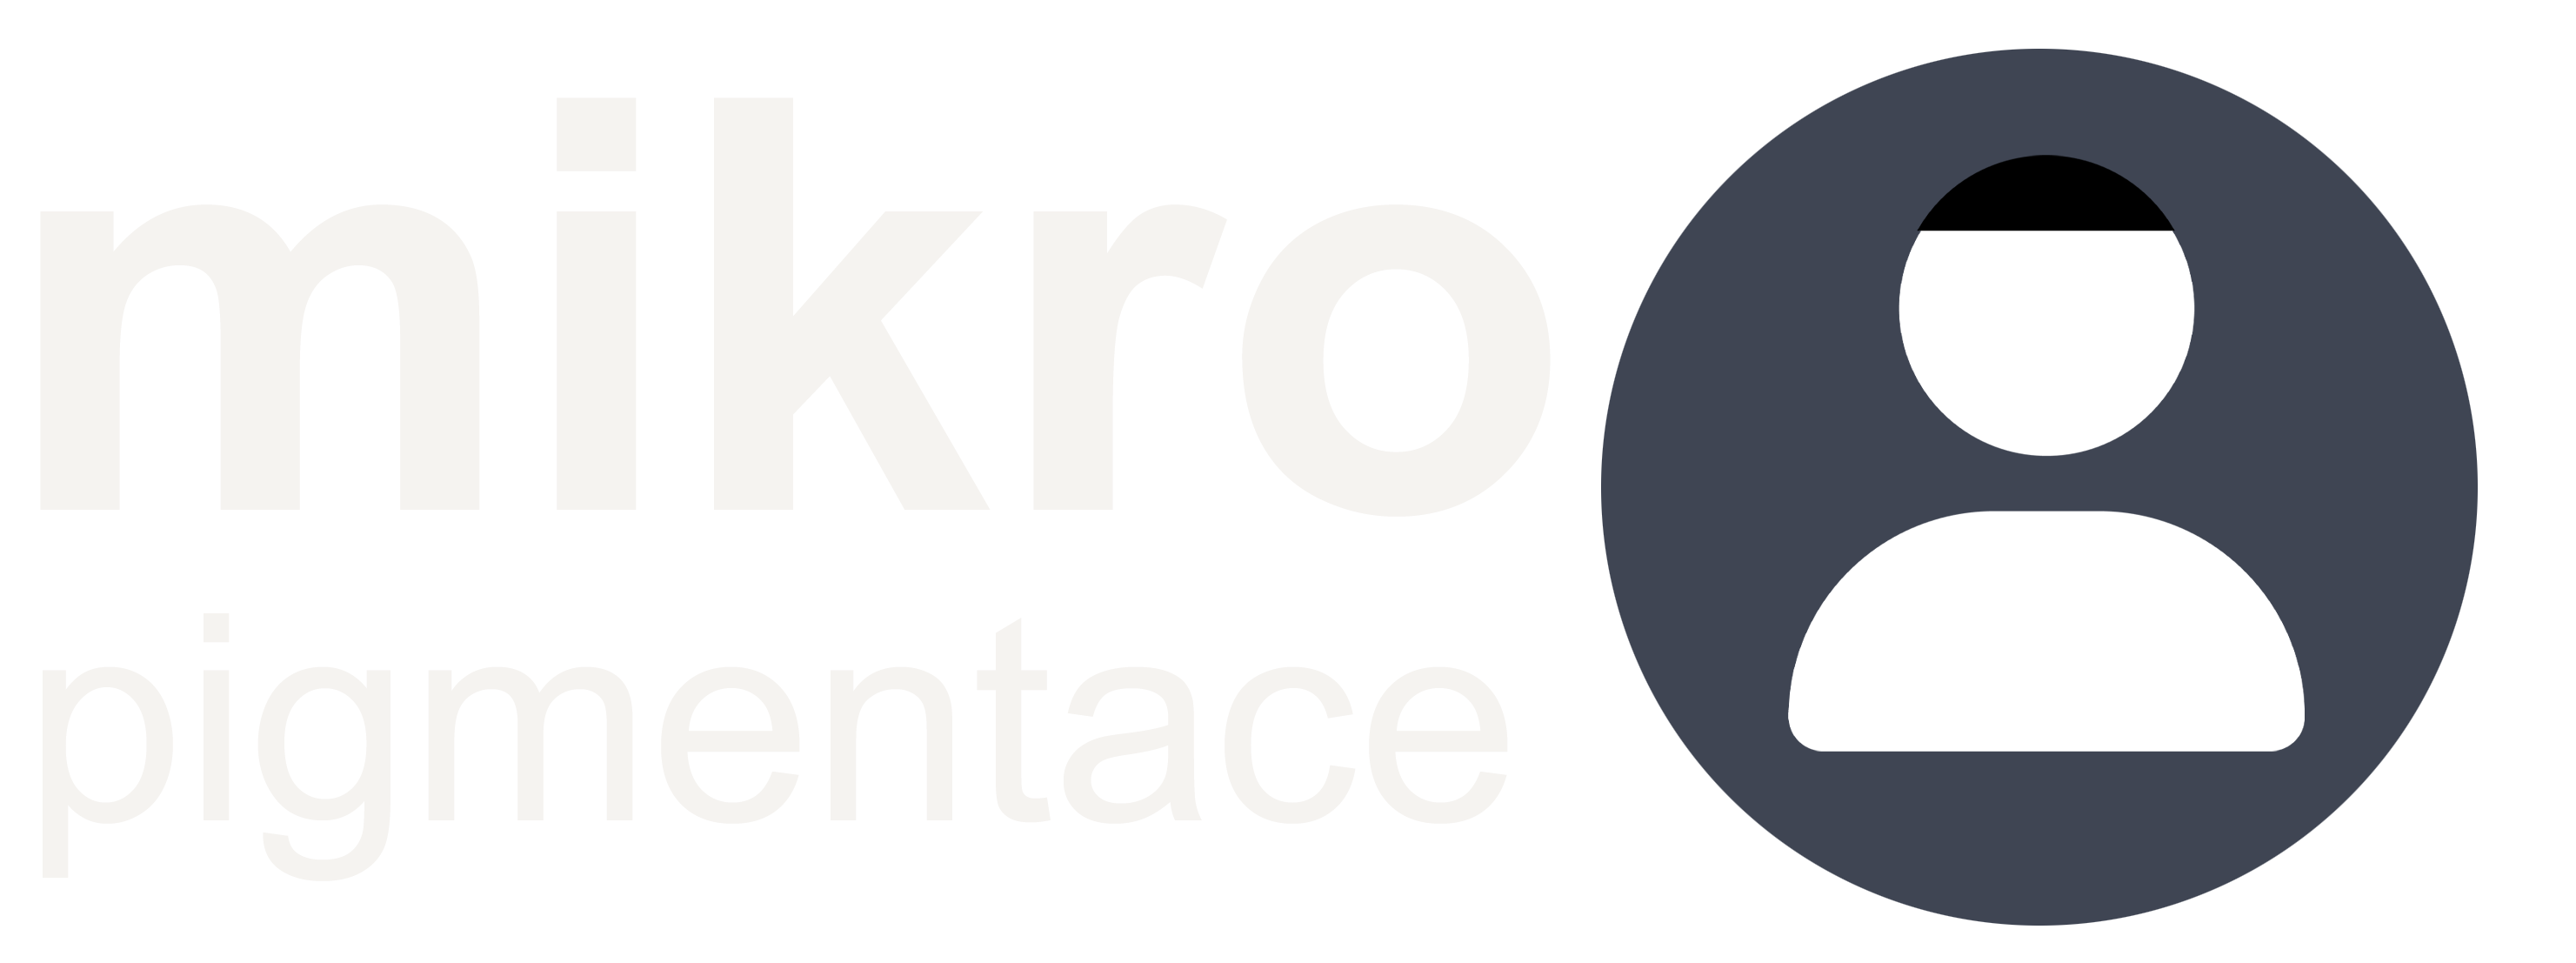 Mikro-pigmentace Logo